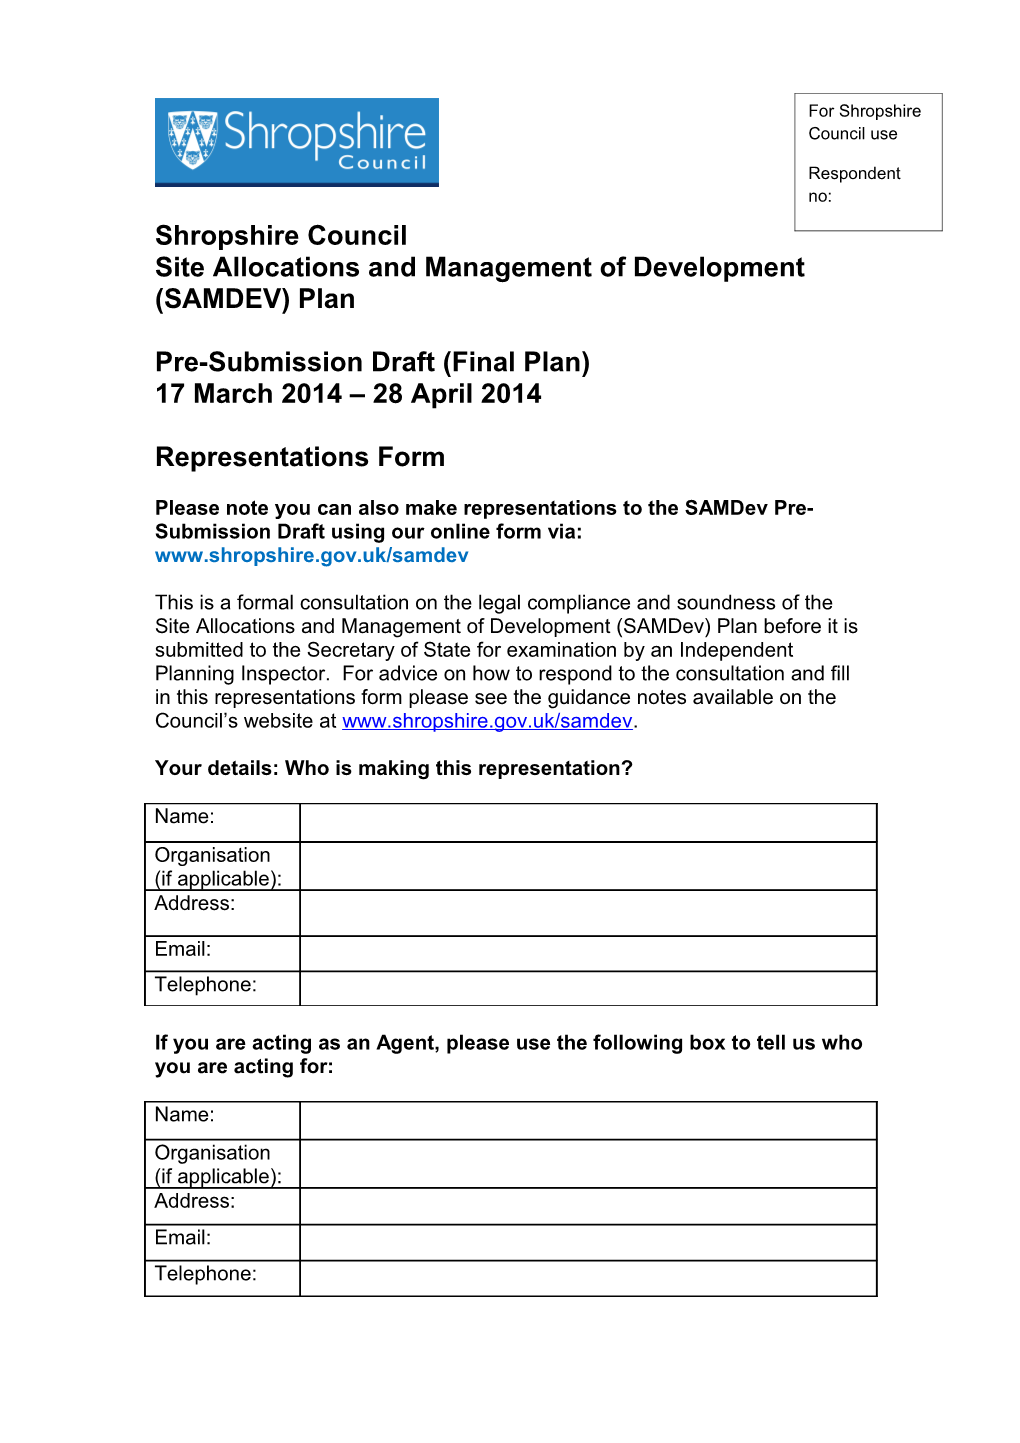 Site Allocations and Management of Development (SAMDEV) Plan